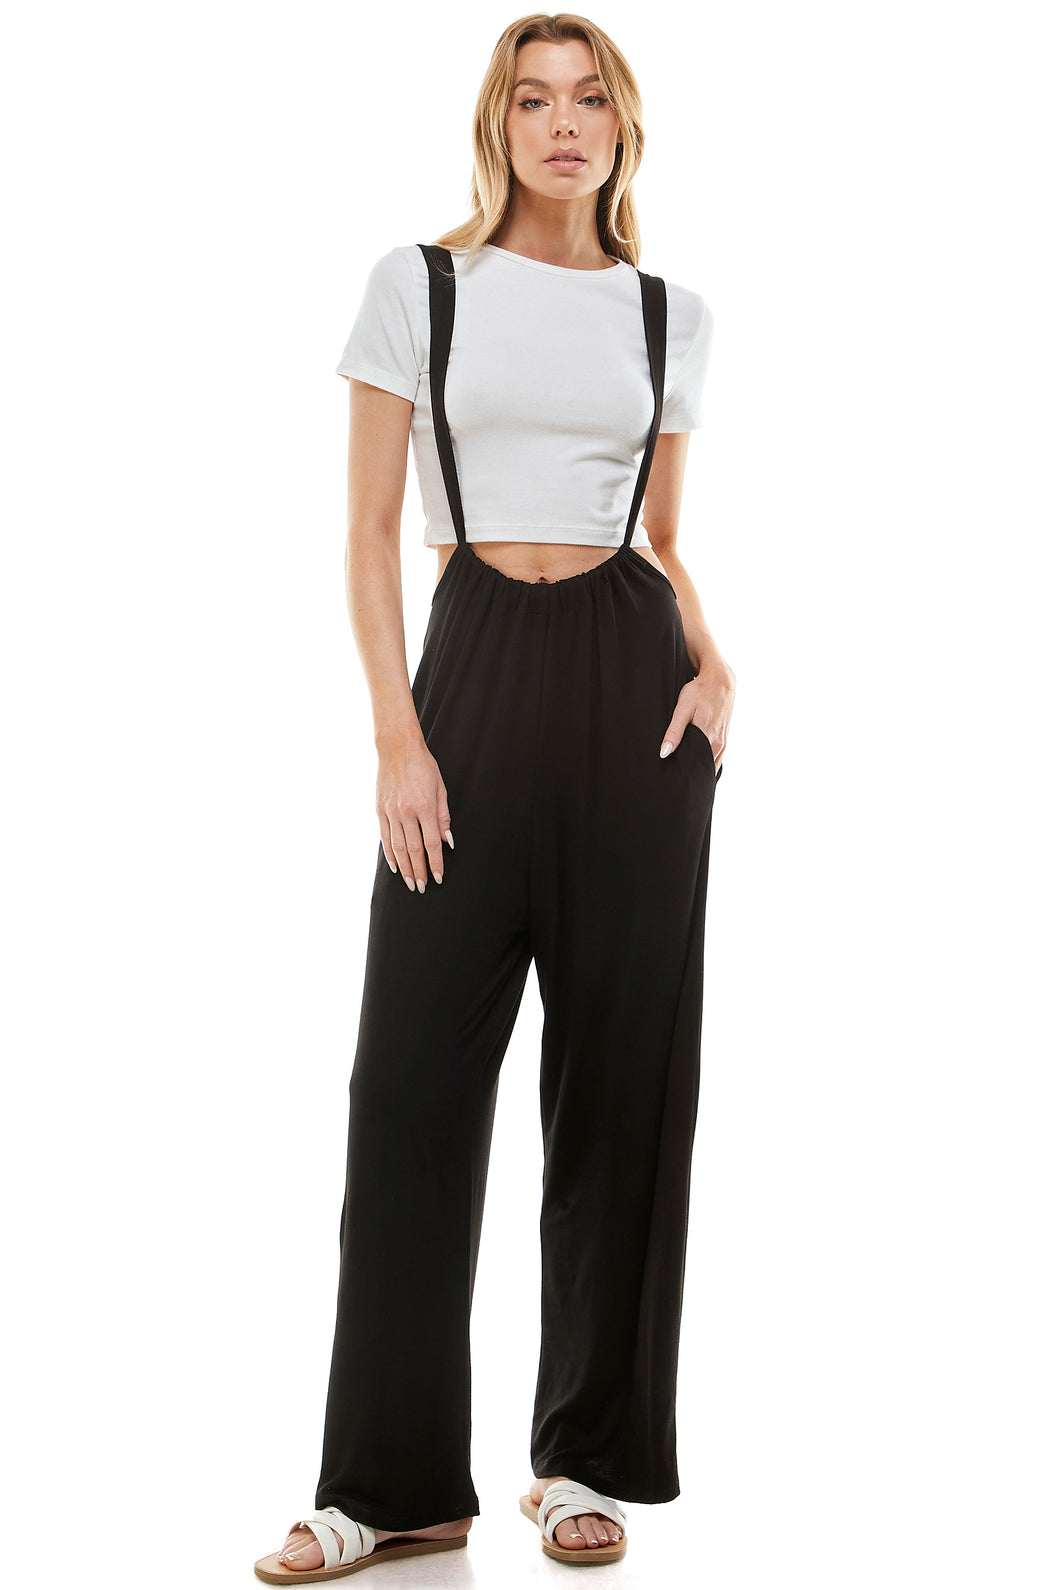 Loose Fit Suspender Pants Overalls Jumpsuits - Black